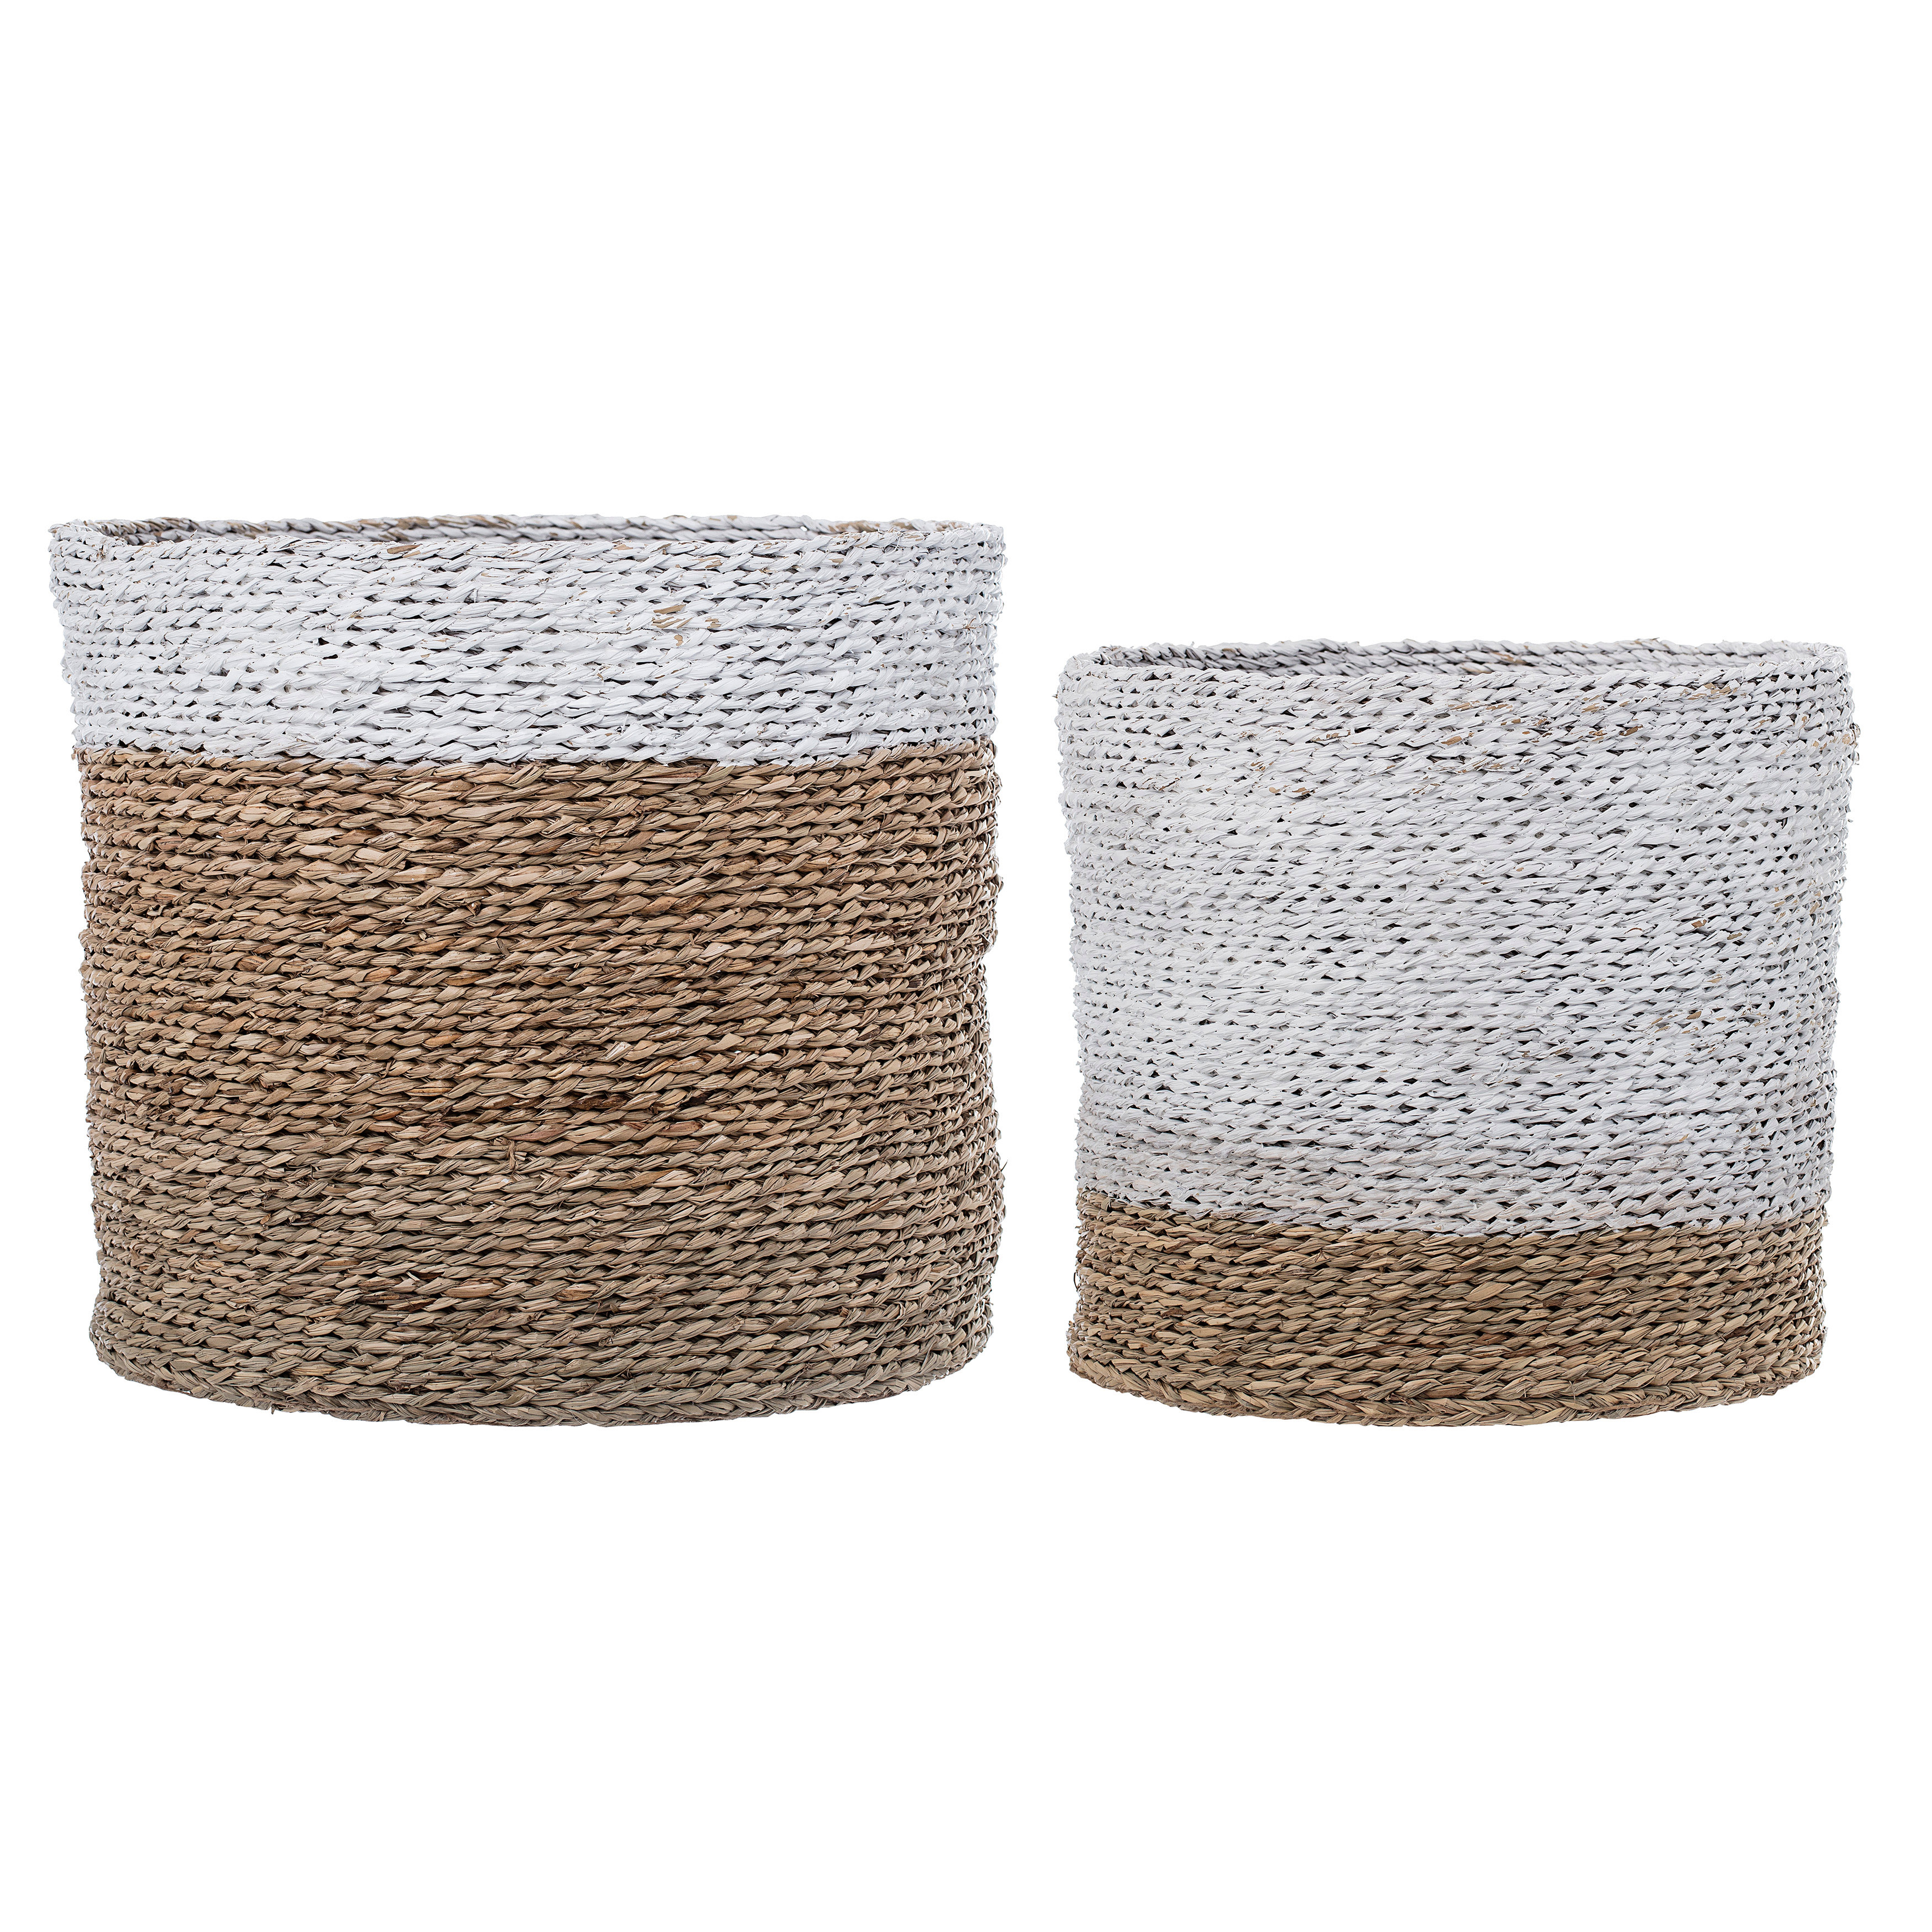 Round White & Brown Natural Seagrass Baskets (Set of 2 Sizes) - Moss & Wilder